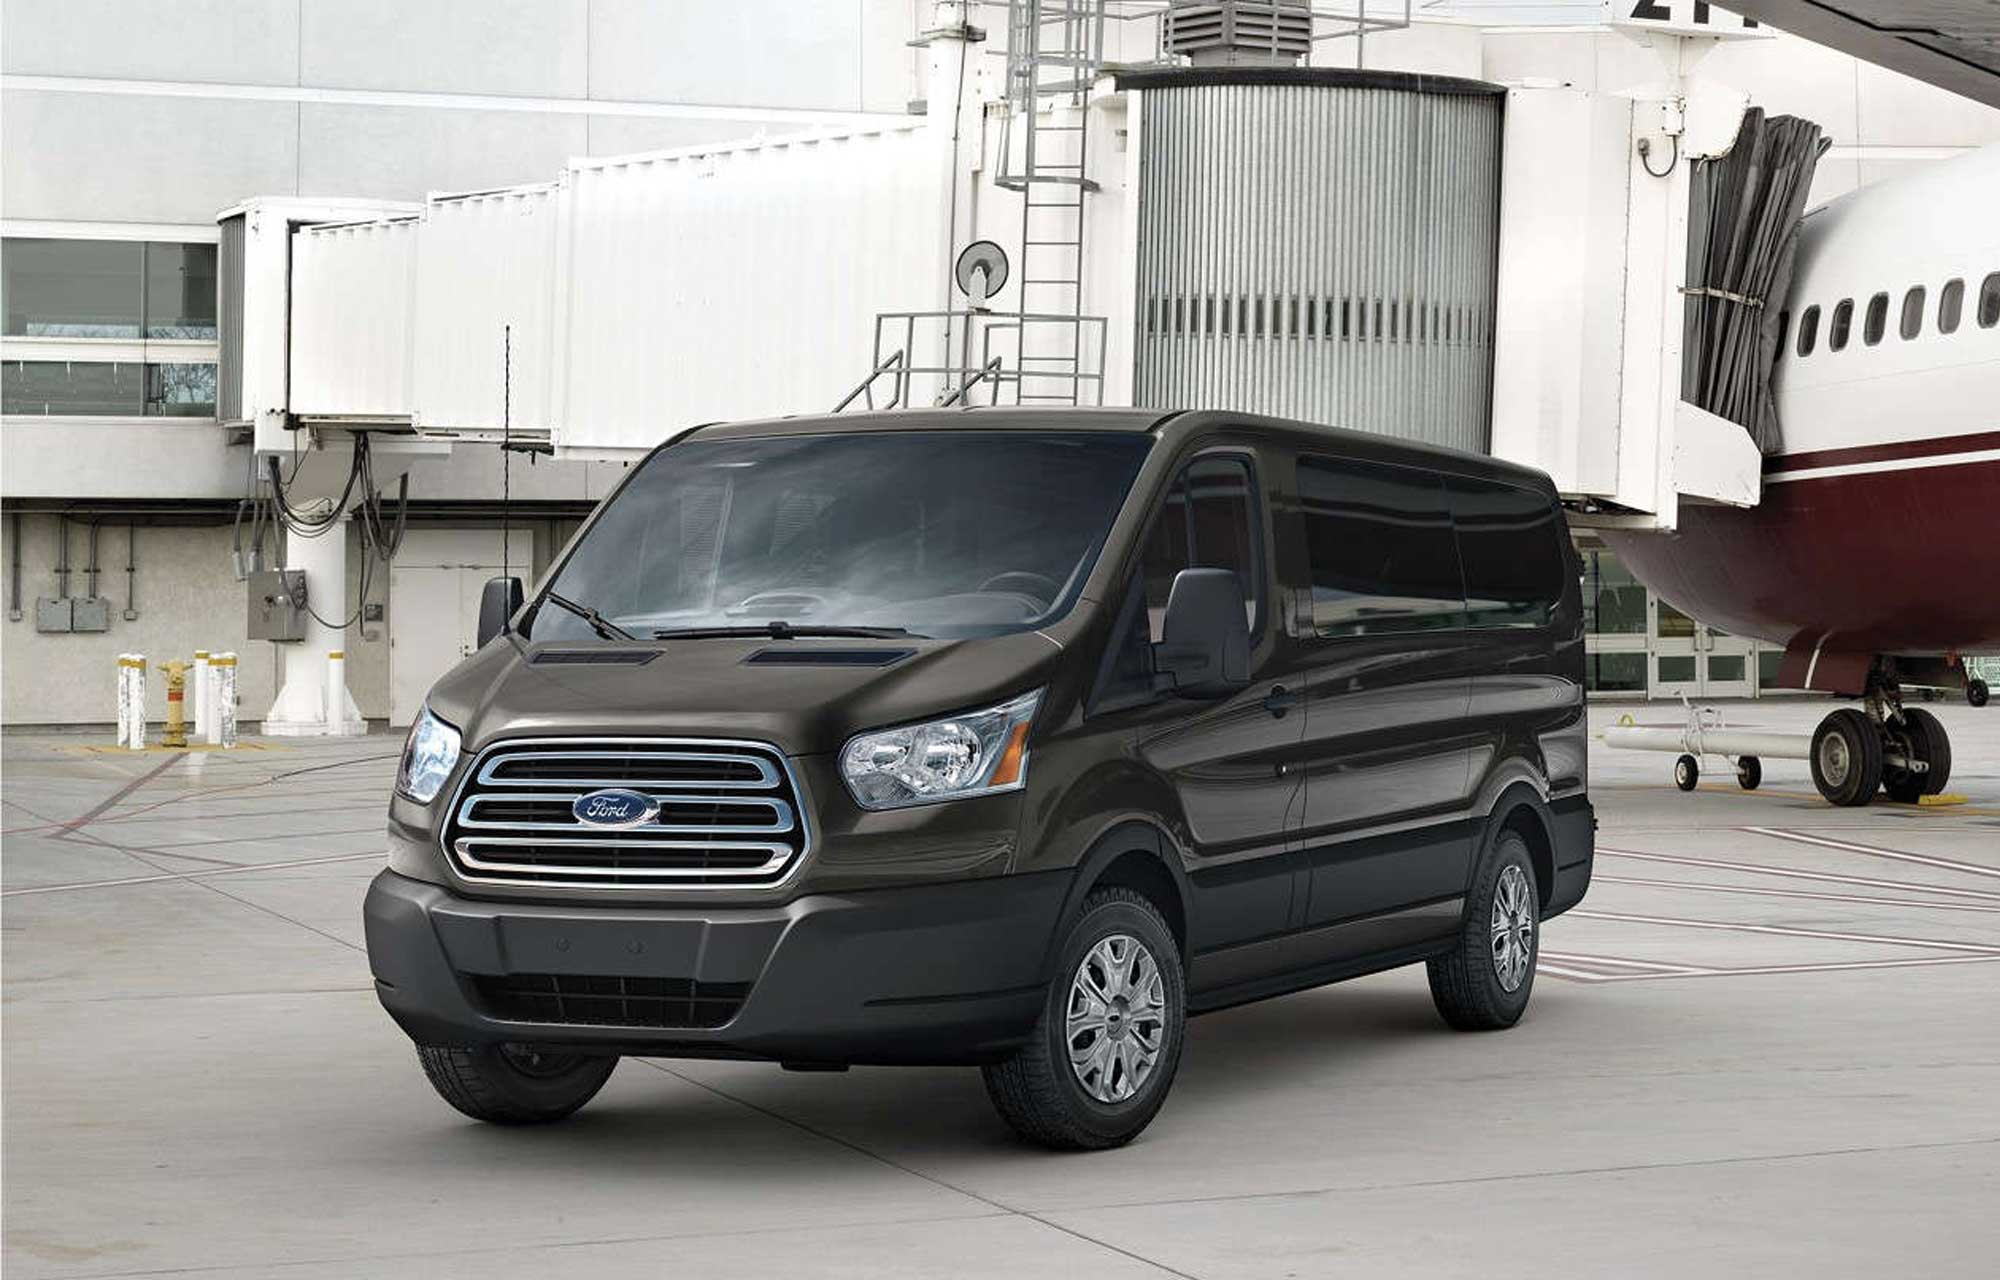 Микроавтобус форд купить россии. Ford Transit 2015. Ford Transit van 2015. Ford Transit 2021 грузовой. Ford Transit 2019.